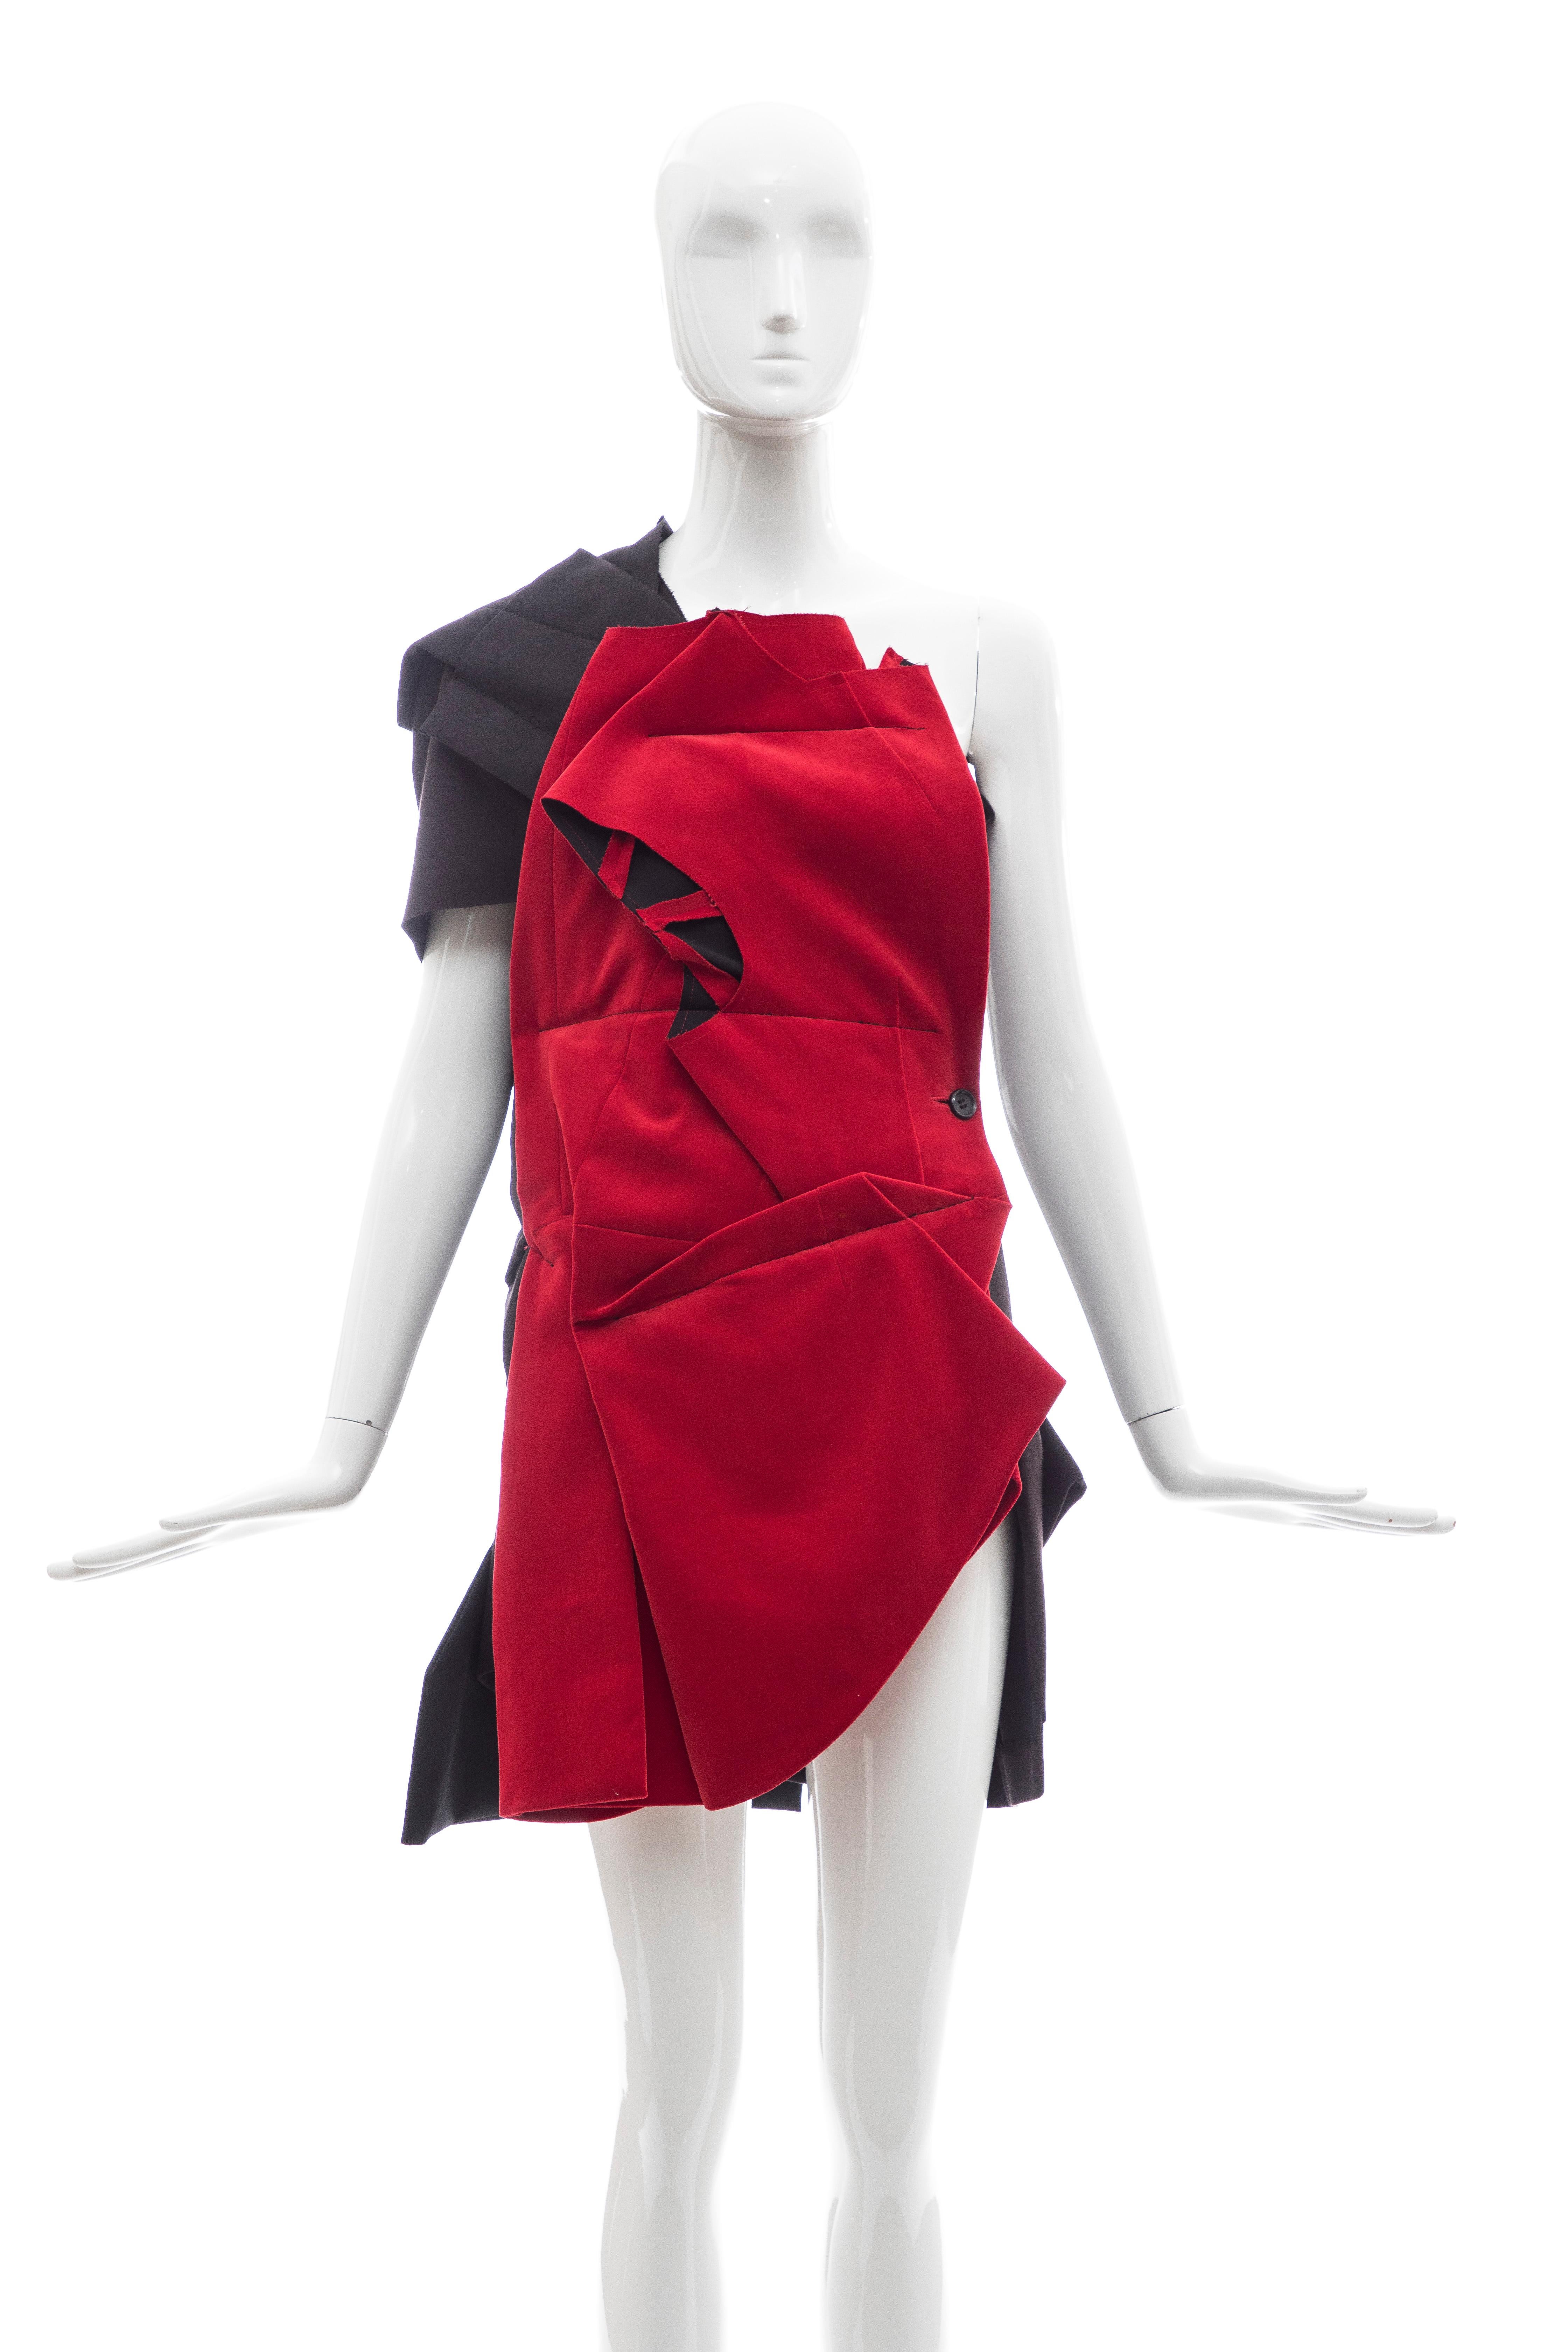 Comme Des Garcons, Spring 2013 Runway (Look 28) black cotton, linen, wool jacket with red velvet button front closure.

Japan: Medium

Bust: 32, Waist: 34, Hips: 46, Length: 33